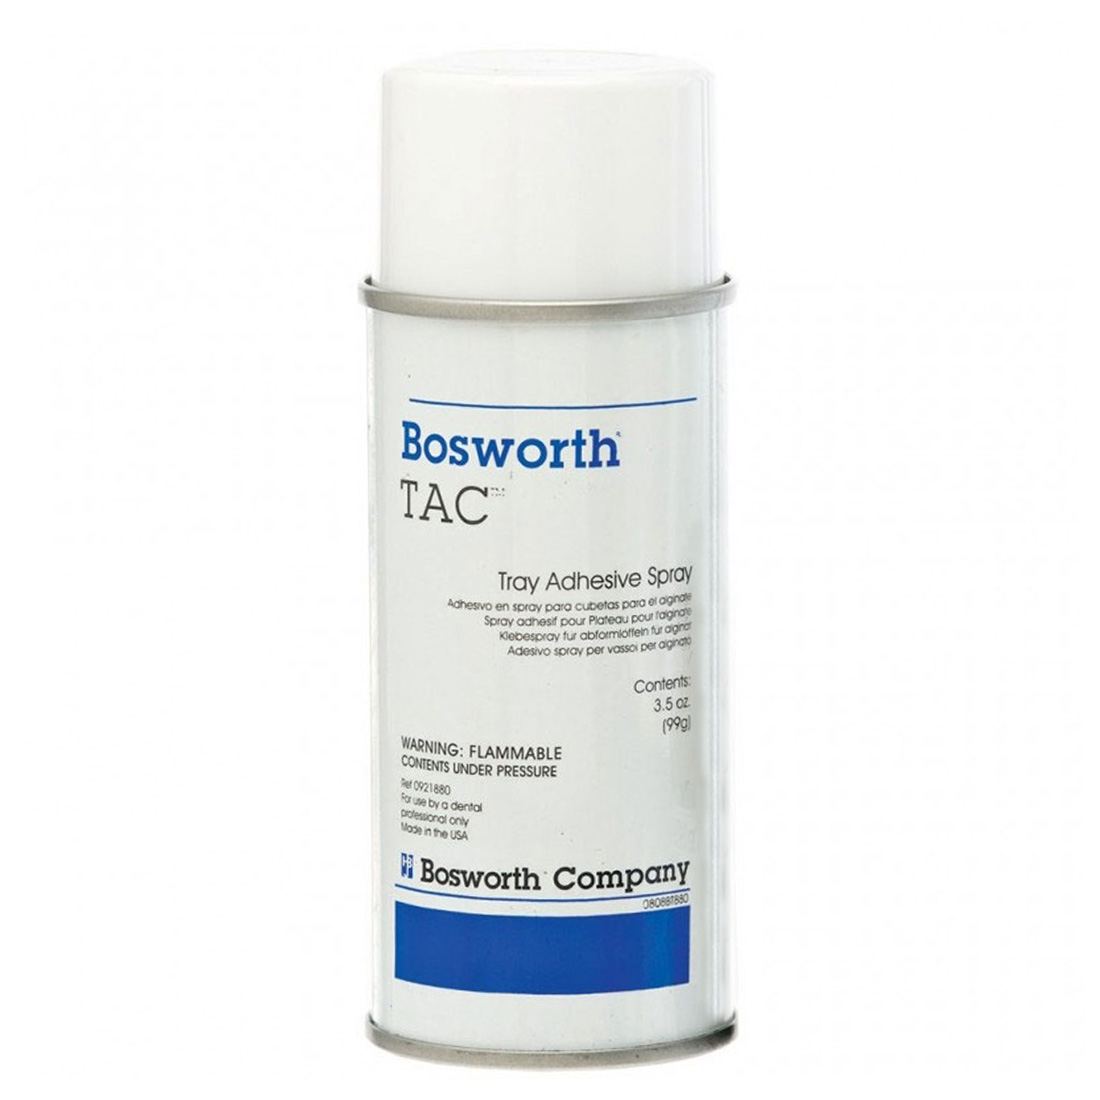 TACâ„¢ Tray Adhesive Compound, 3.5 oz Spray